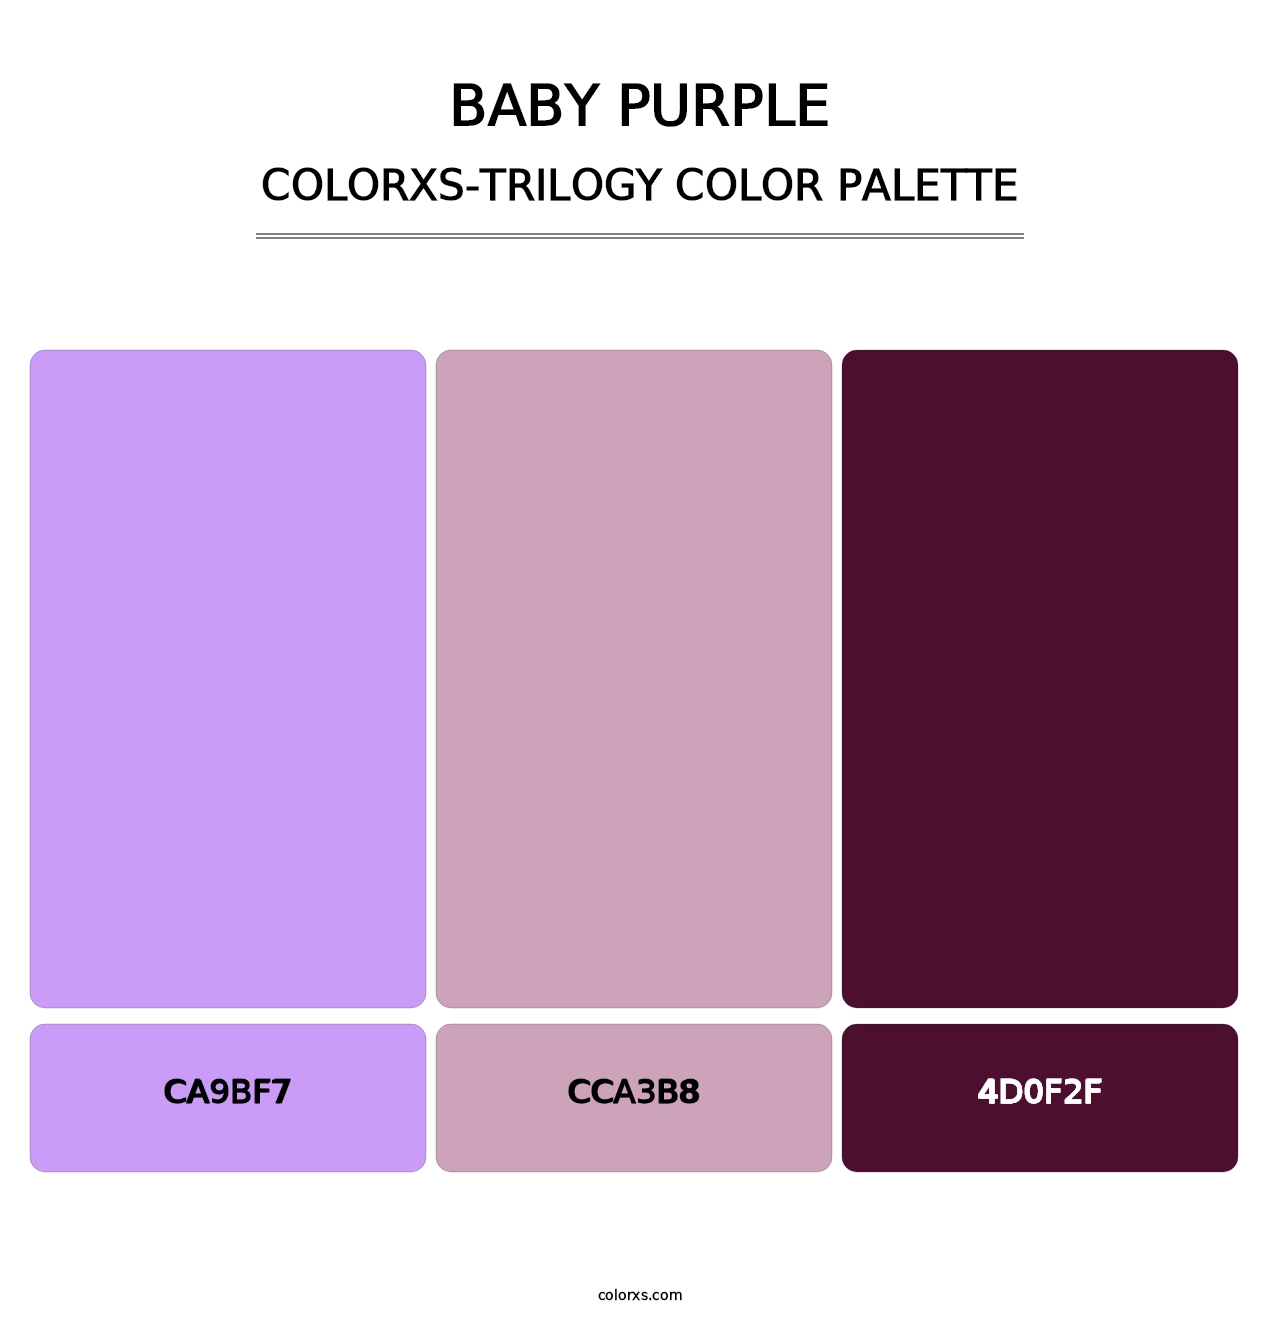 Baby Purple - Colorxs Trilogy Palette